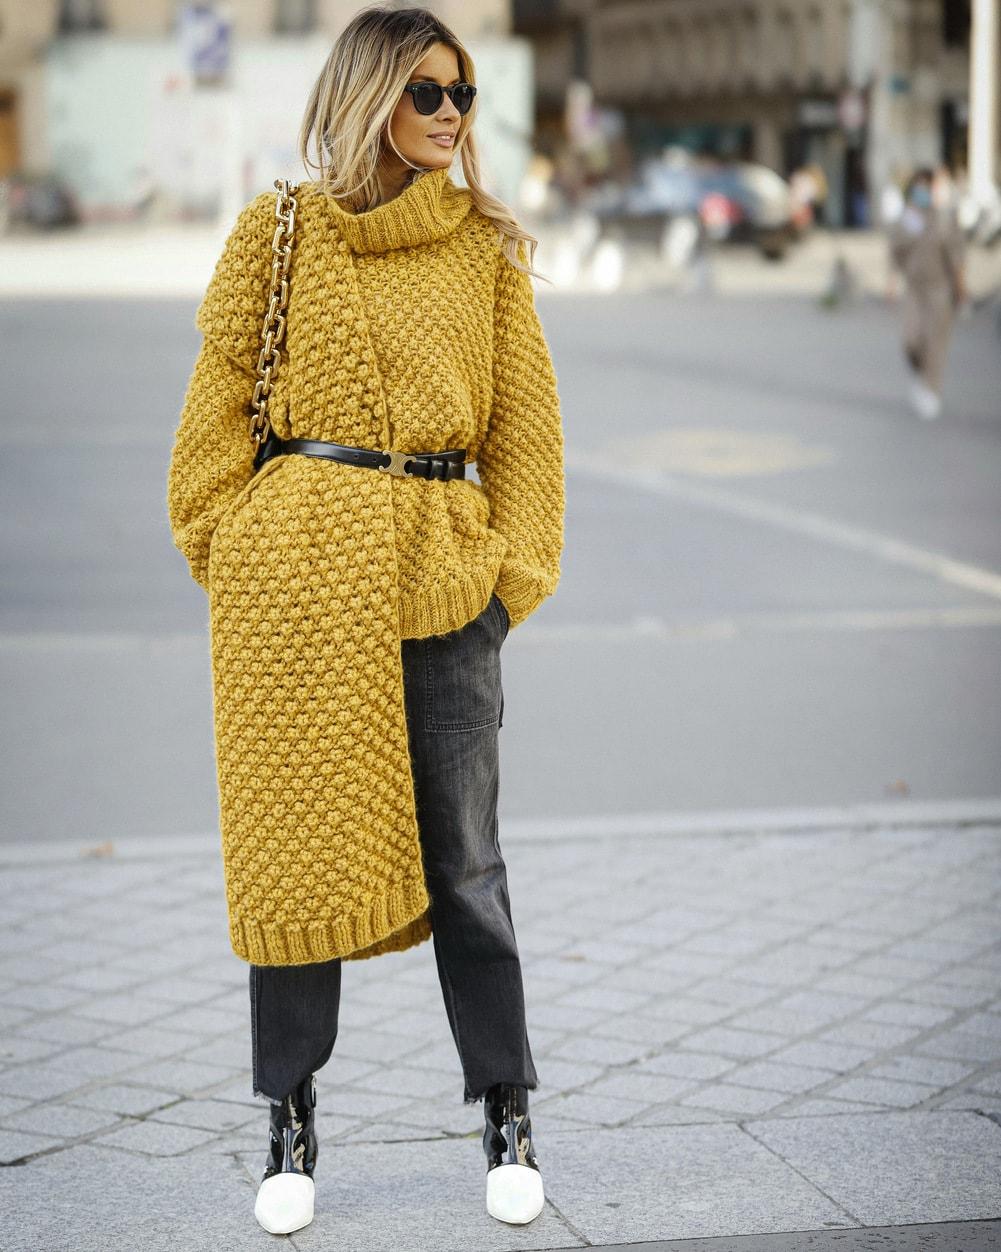 Gitta Banko Influencerin Instagram Outfit